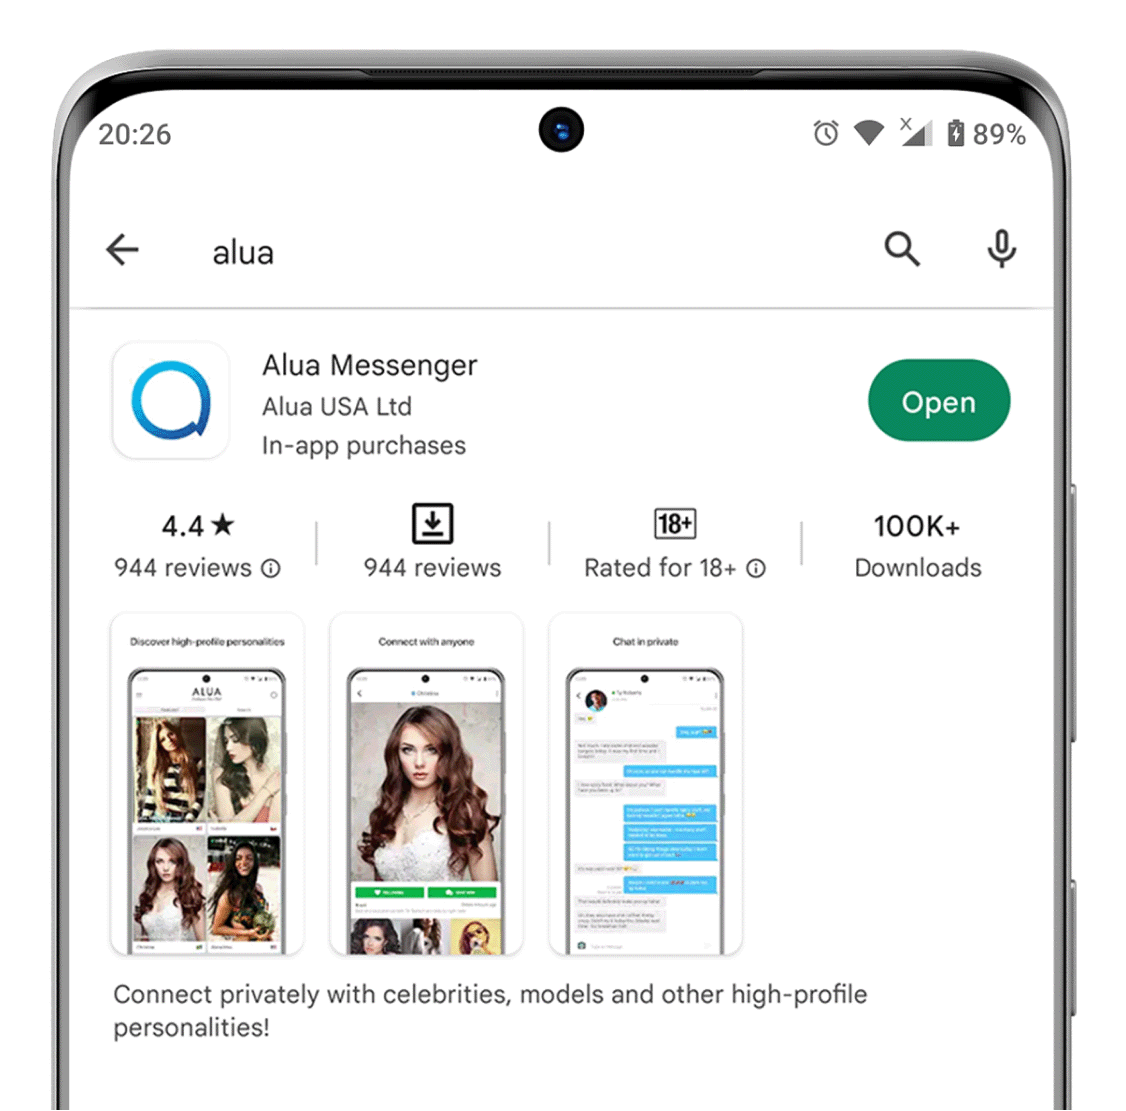 Download Alua Messenger as customers